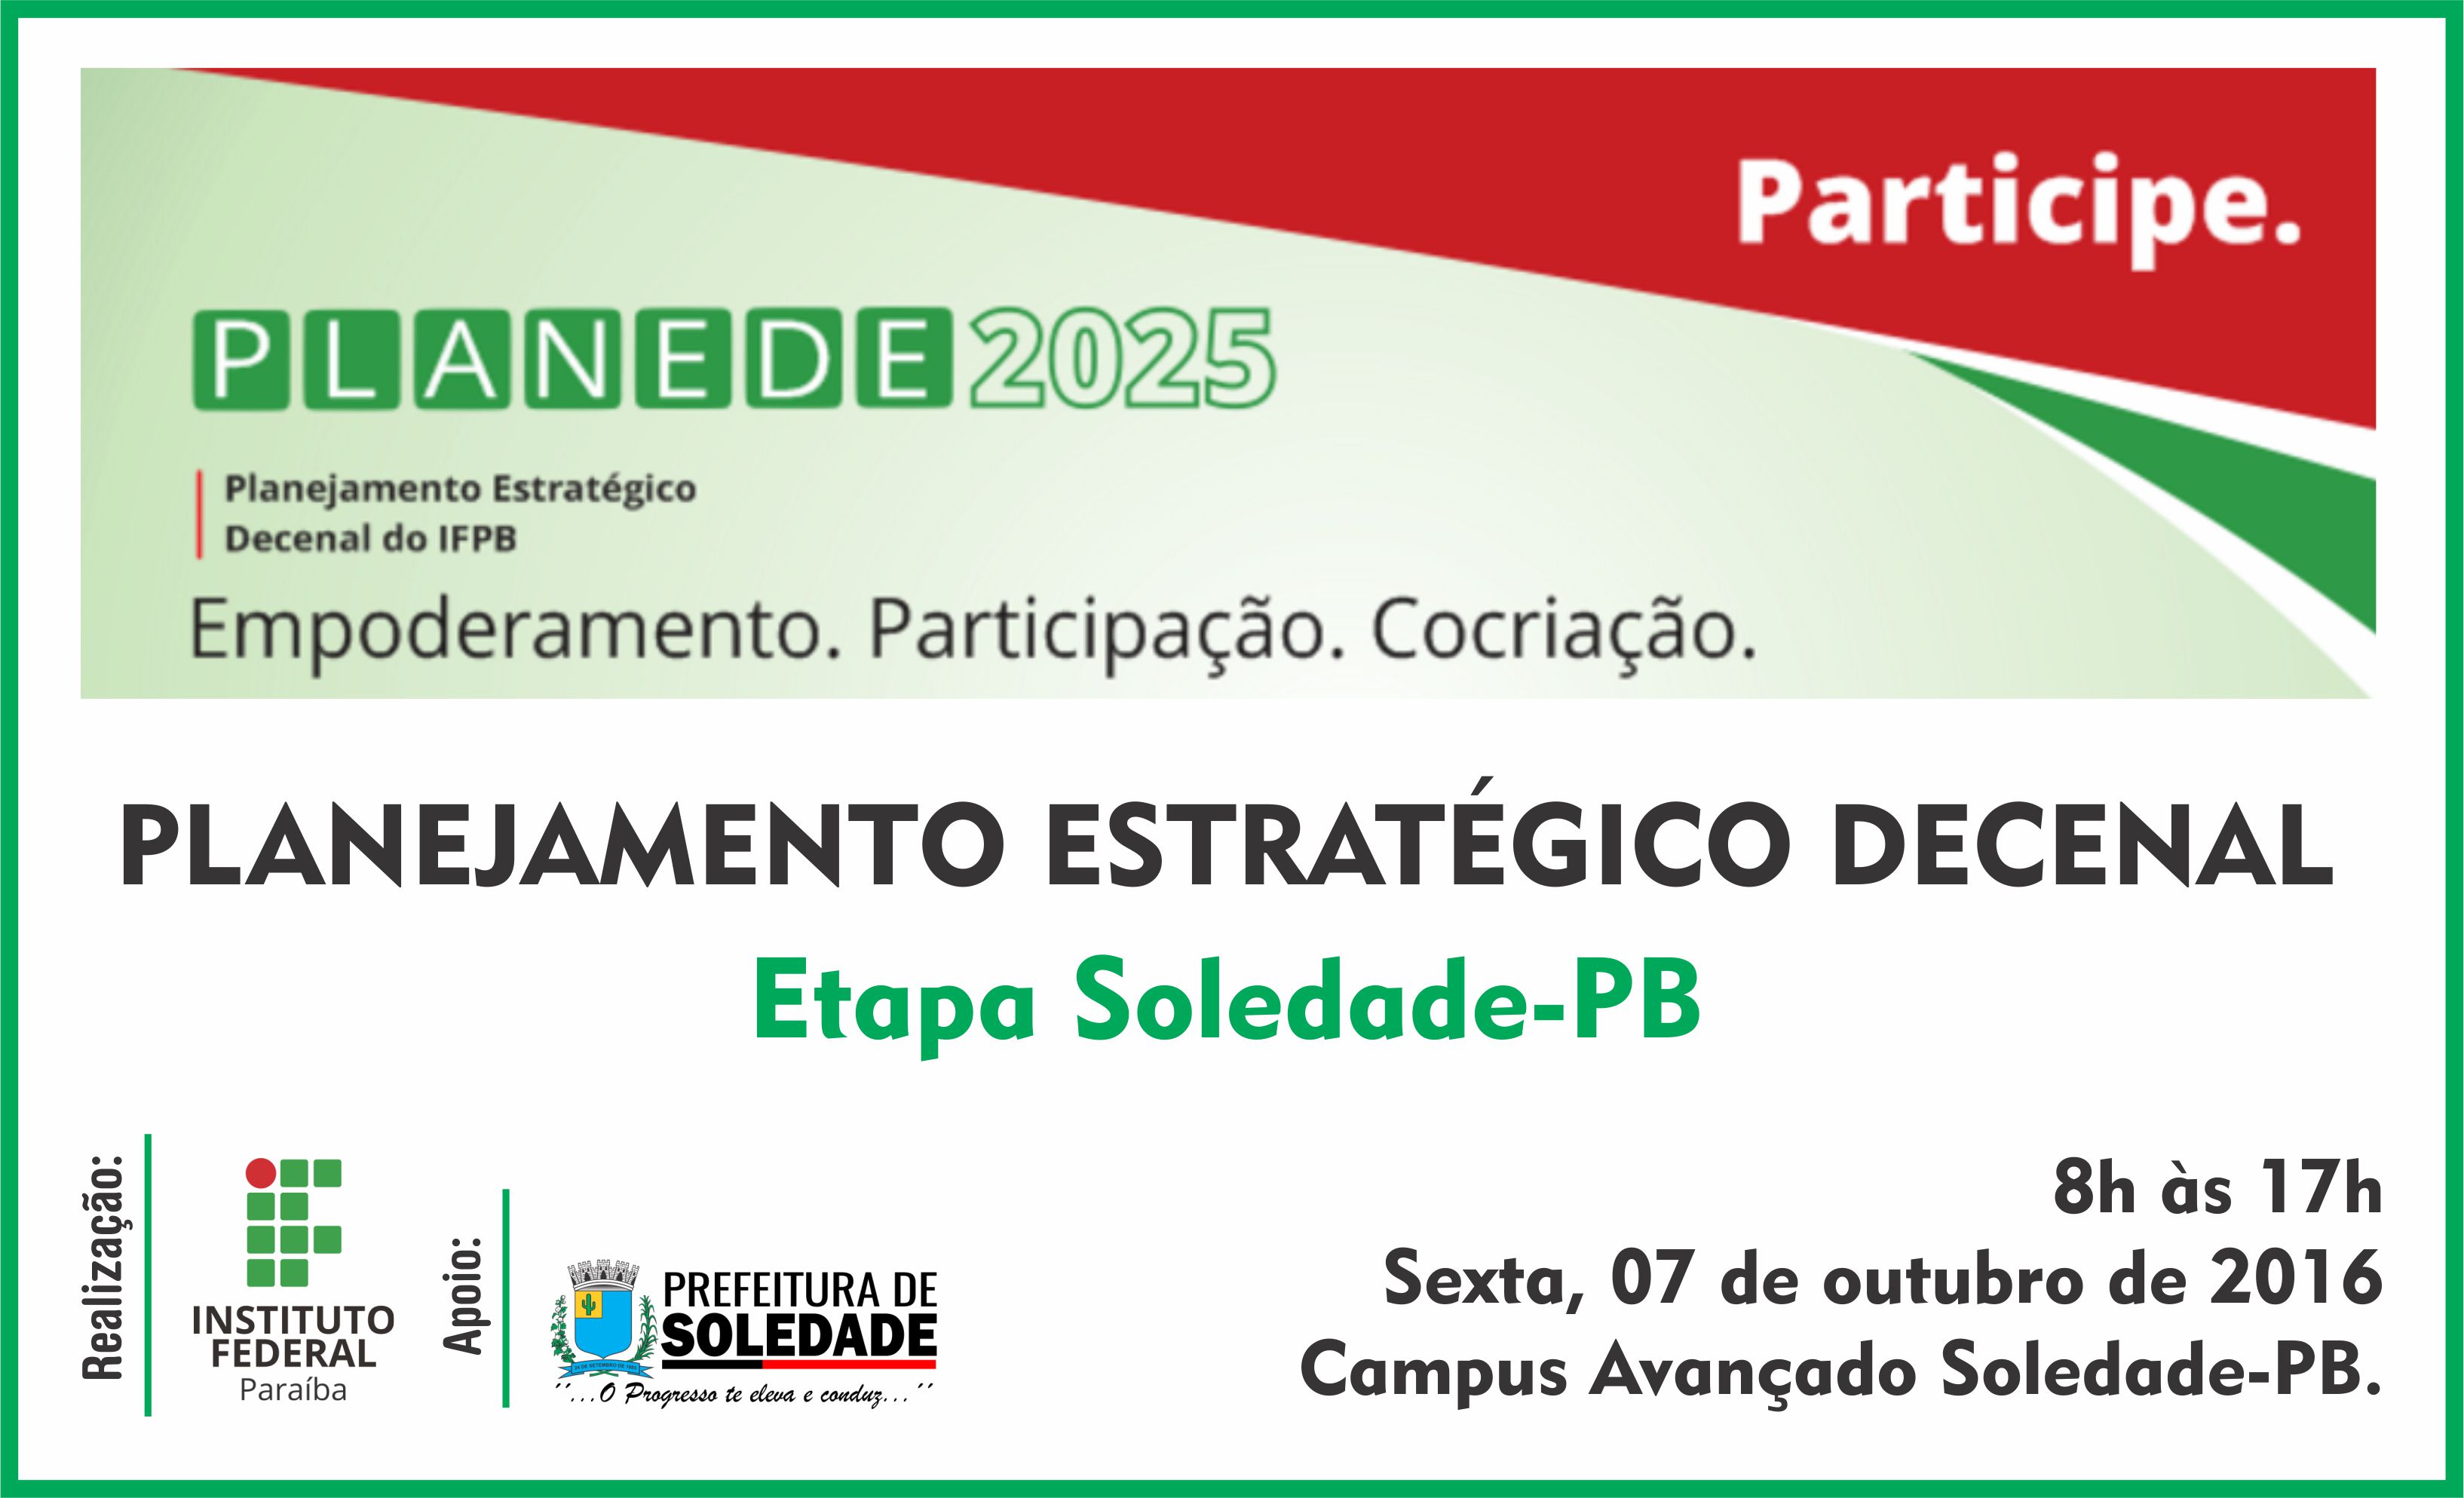 PLANEDE - Campus Soledade